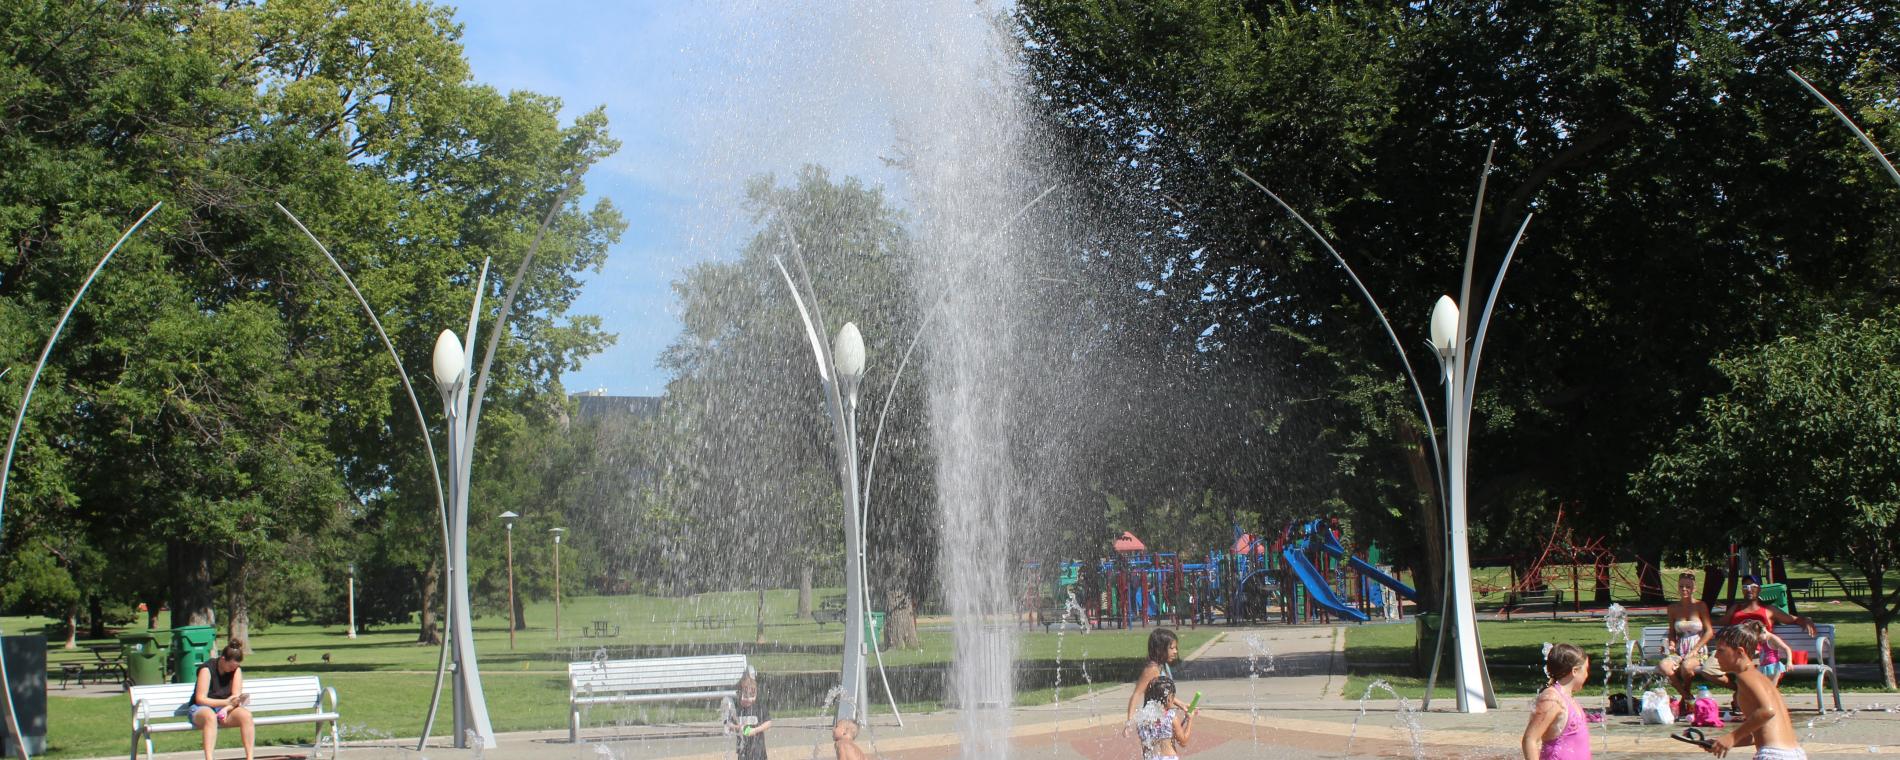 Riverside Park Splash Pad2